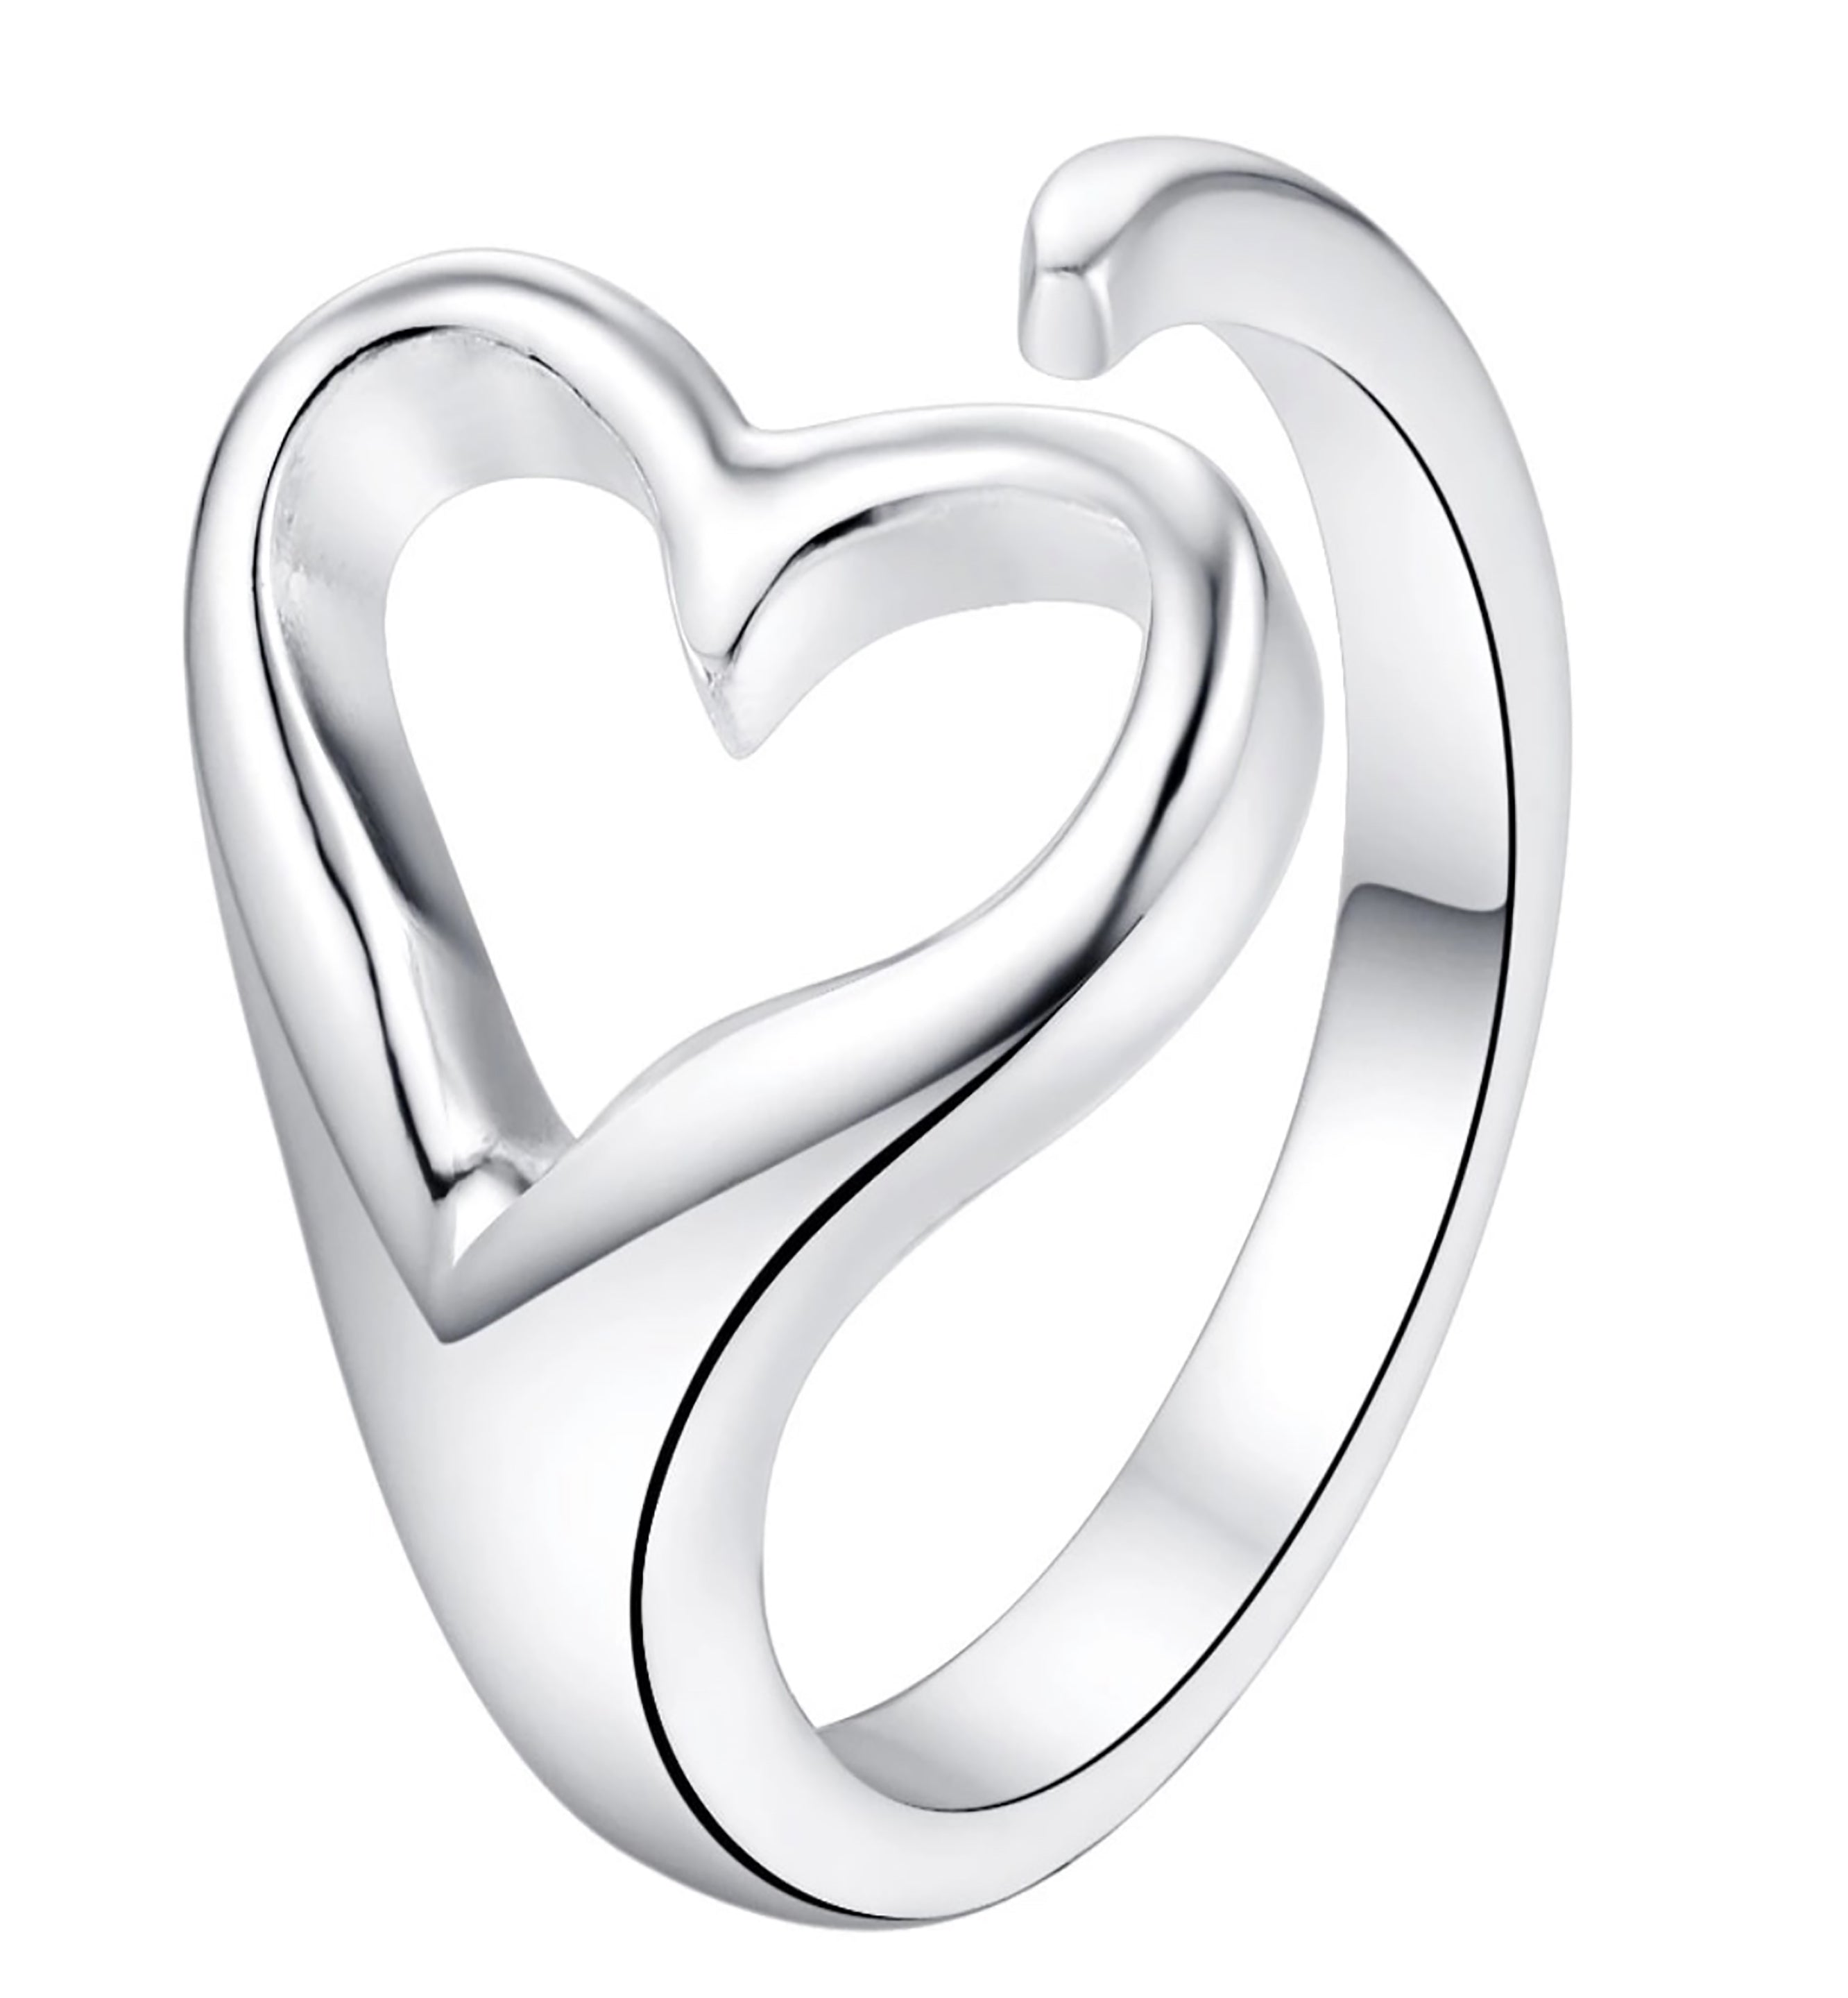 Adjustable Love Heart Fashion Ring